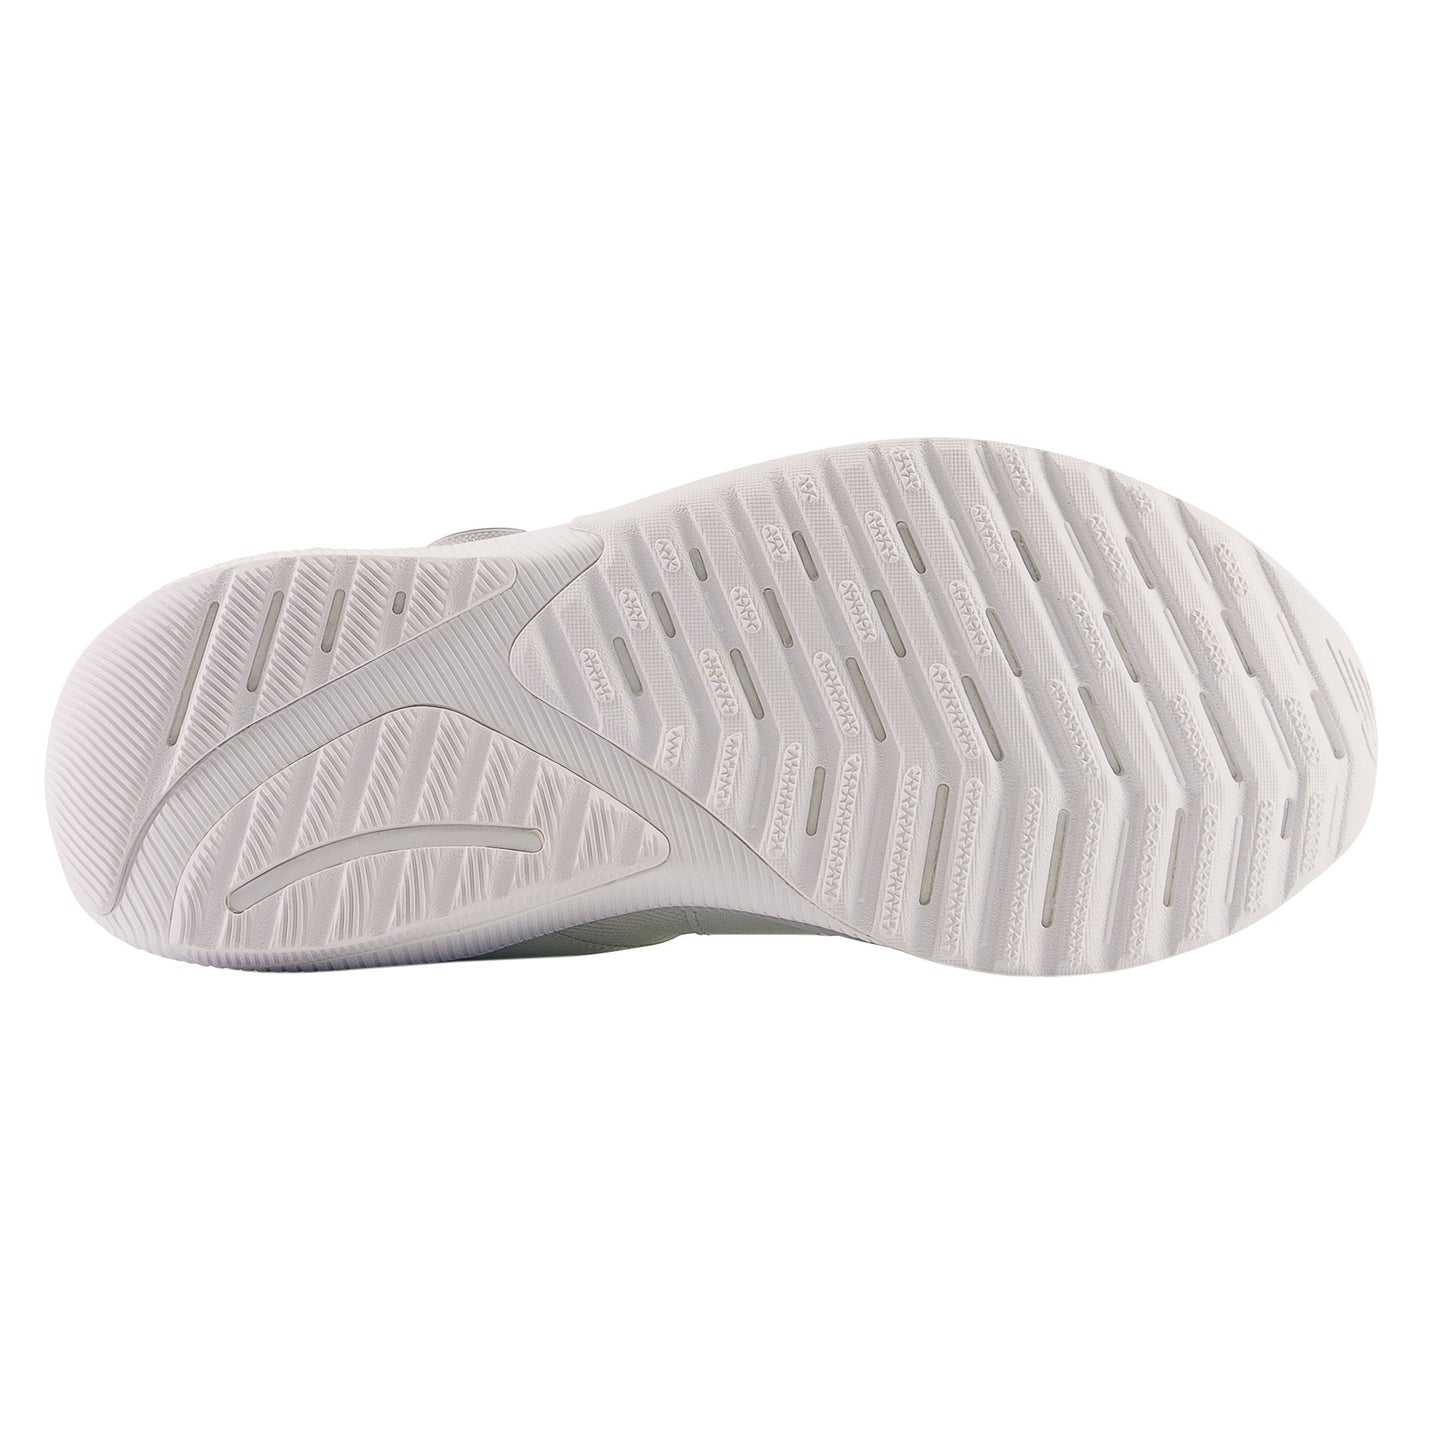 Peltz Shoes  Girl's New Balance Fuel Core Reveal v4 Sneaker - Big Kid WHITE GTRVLWH4